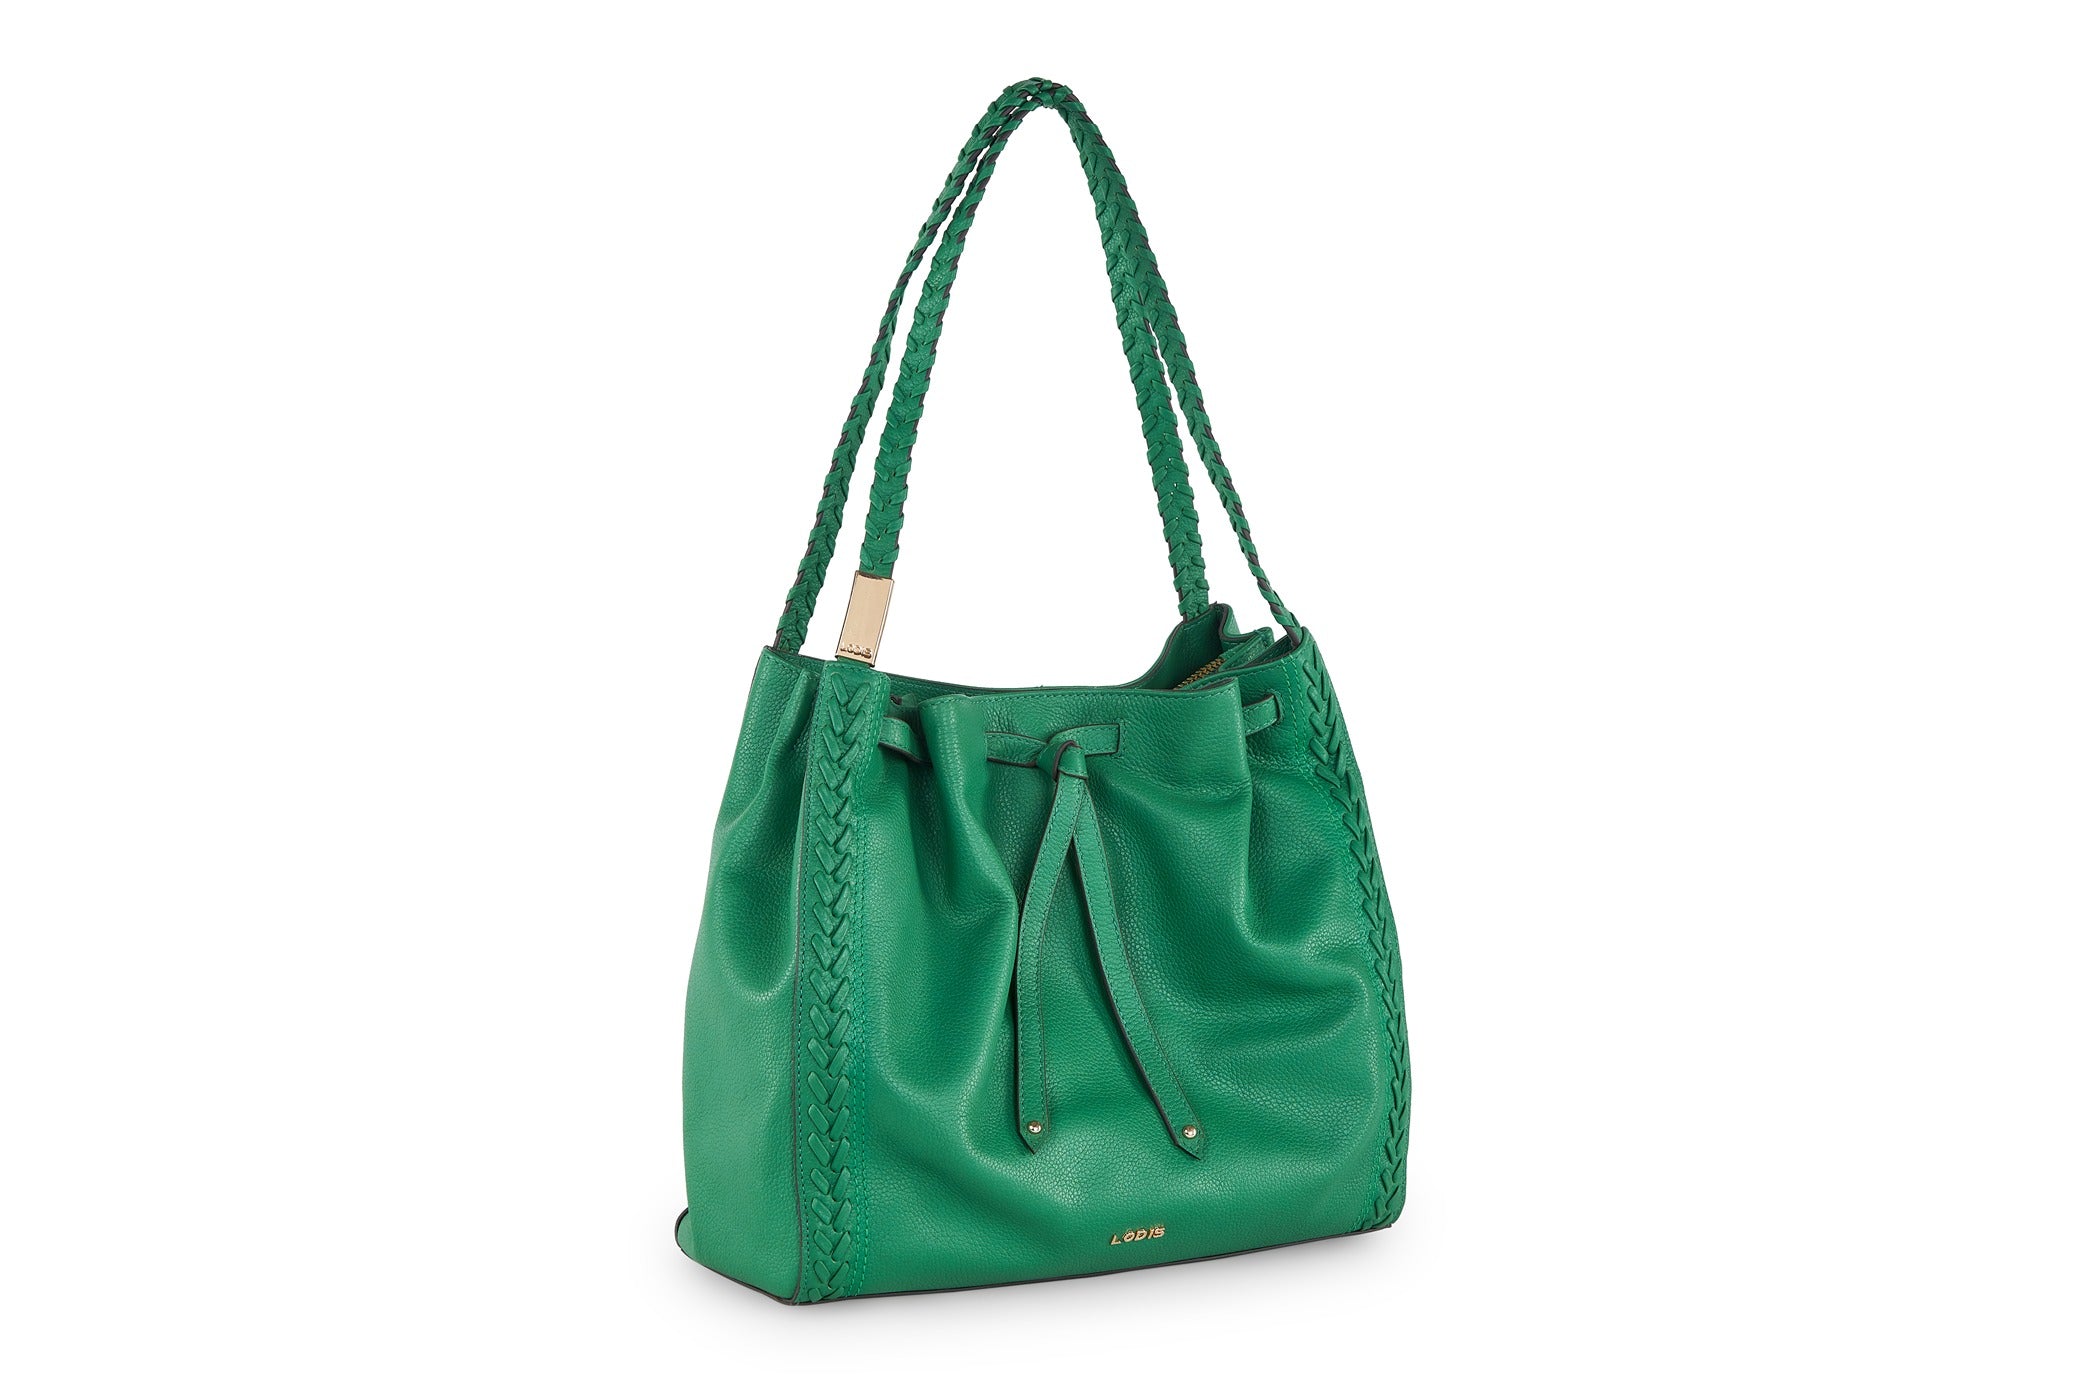 Shop Now The Harper Tote bag | Lodis